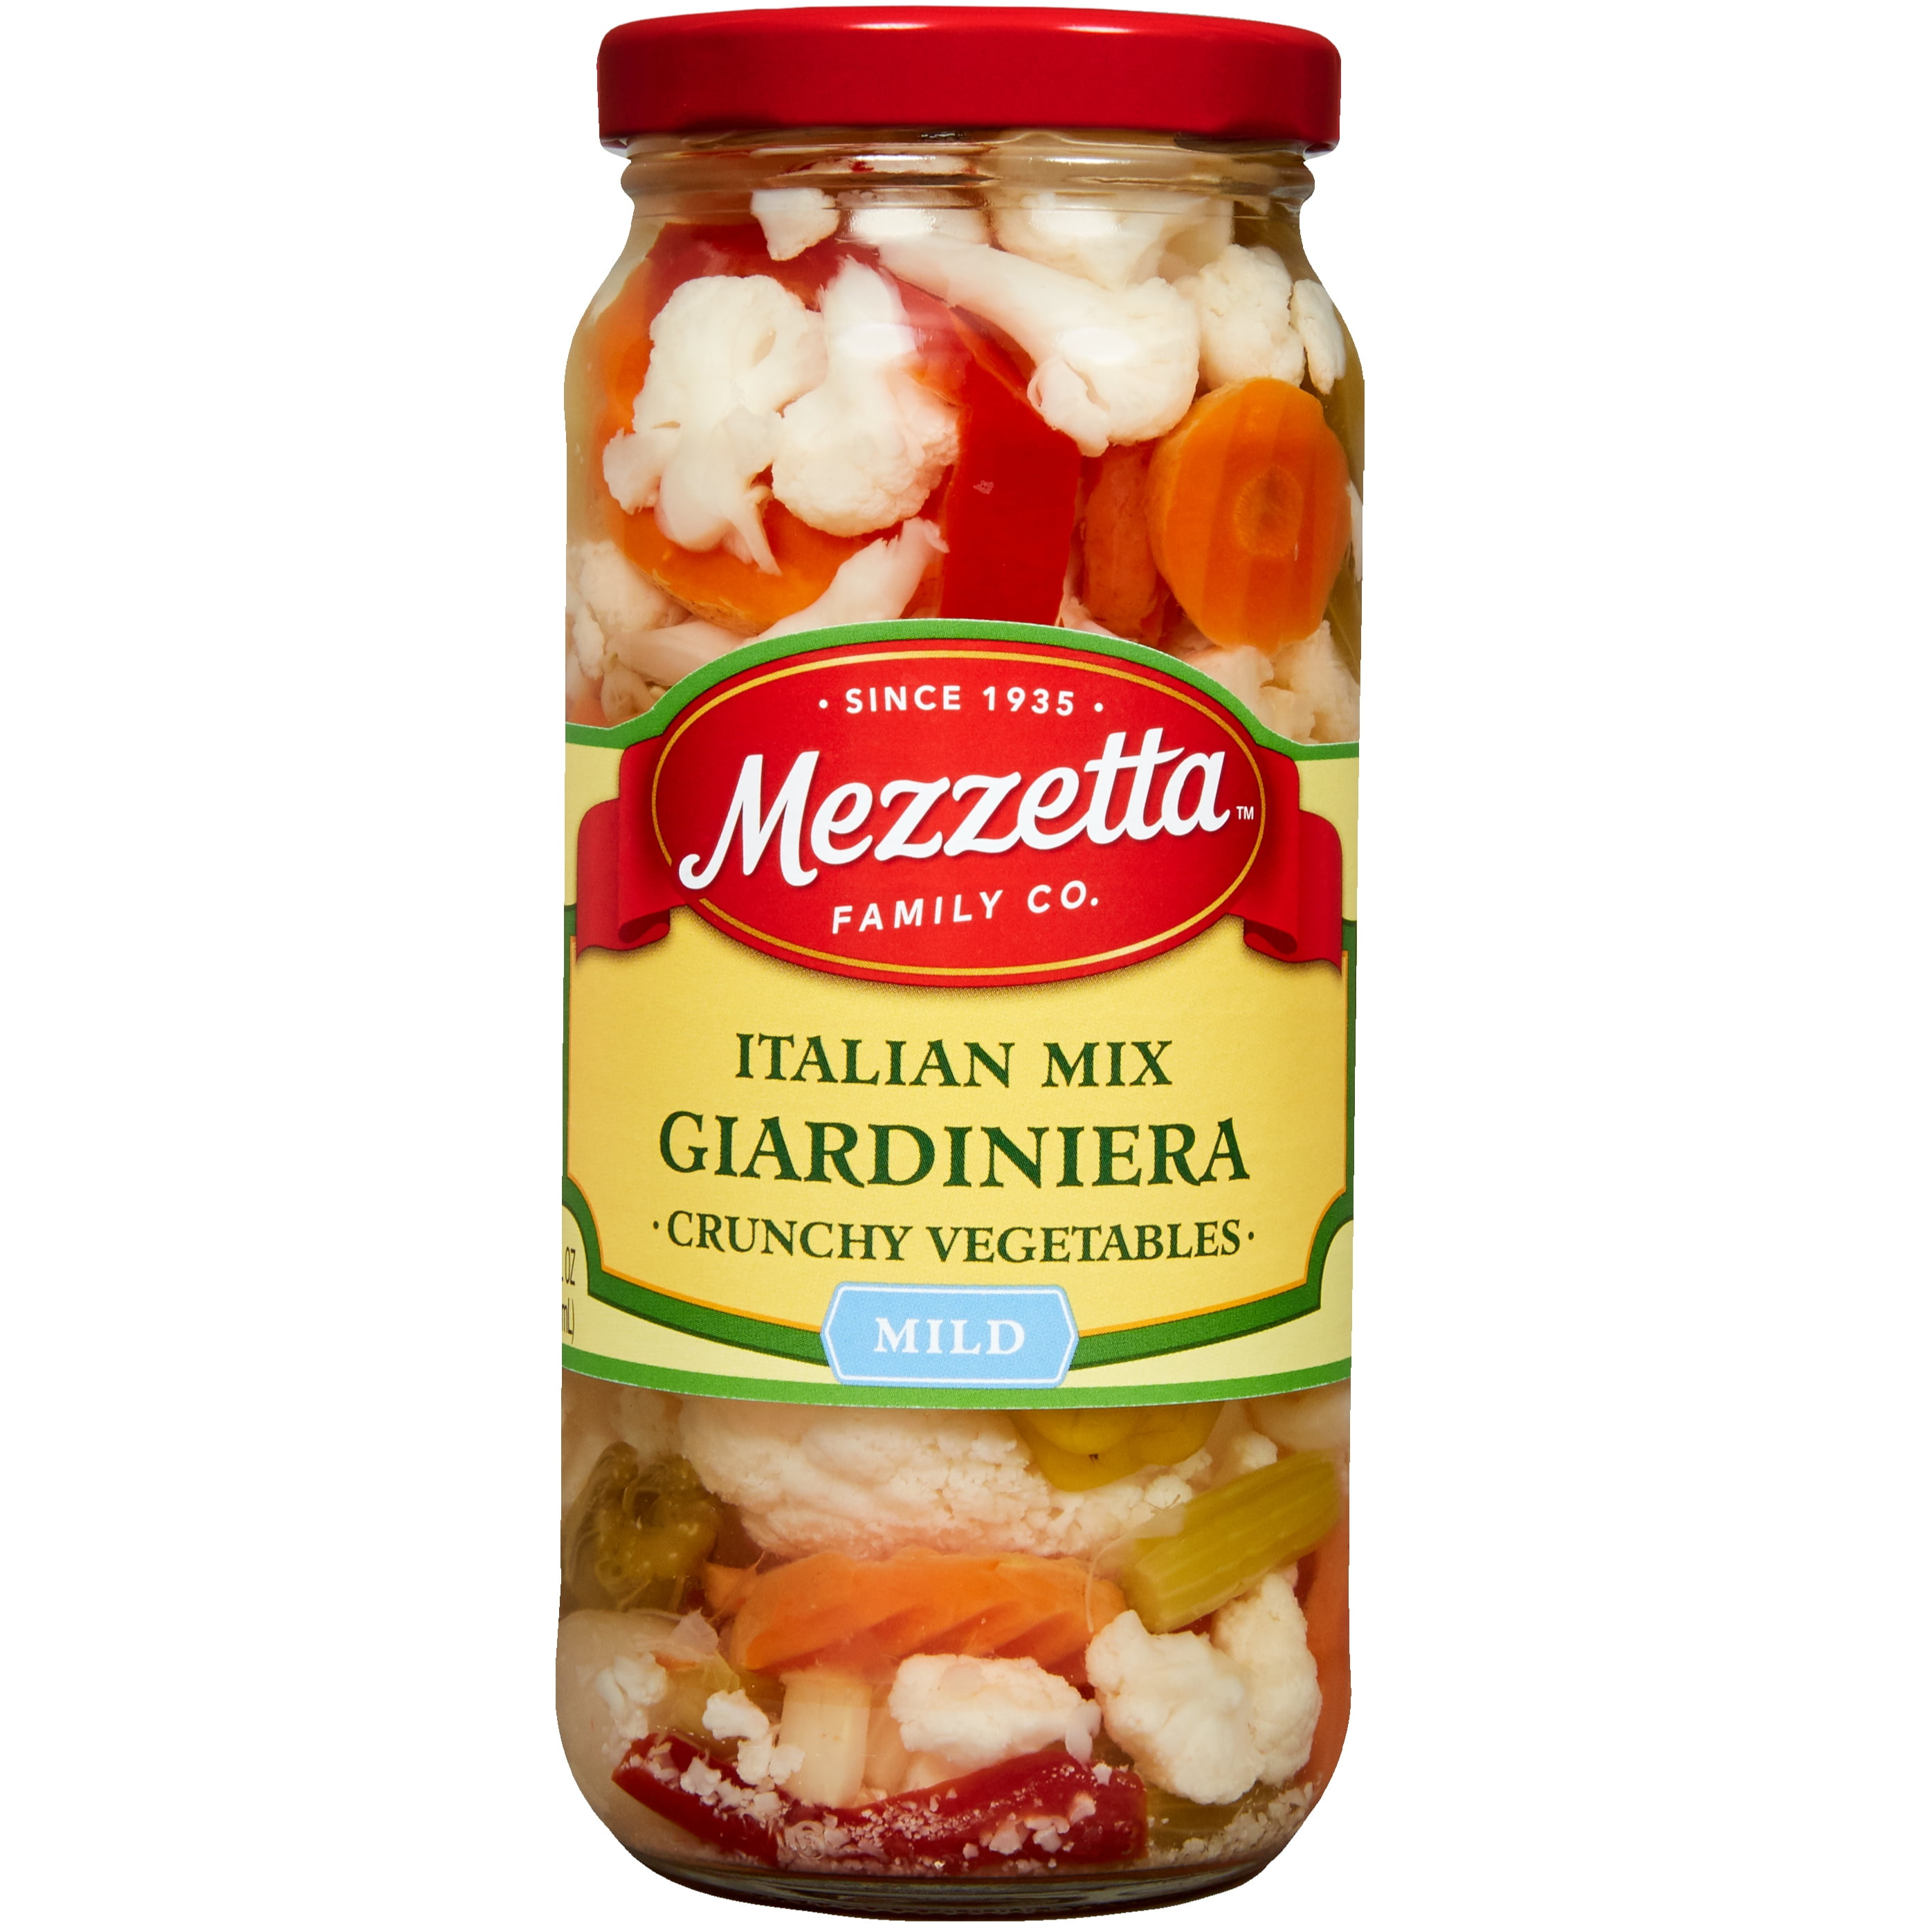 Mezzetta Italian Mix Giardiniera Mild, 16 fl oz Jar - image 1 of 7